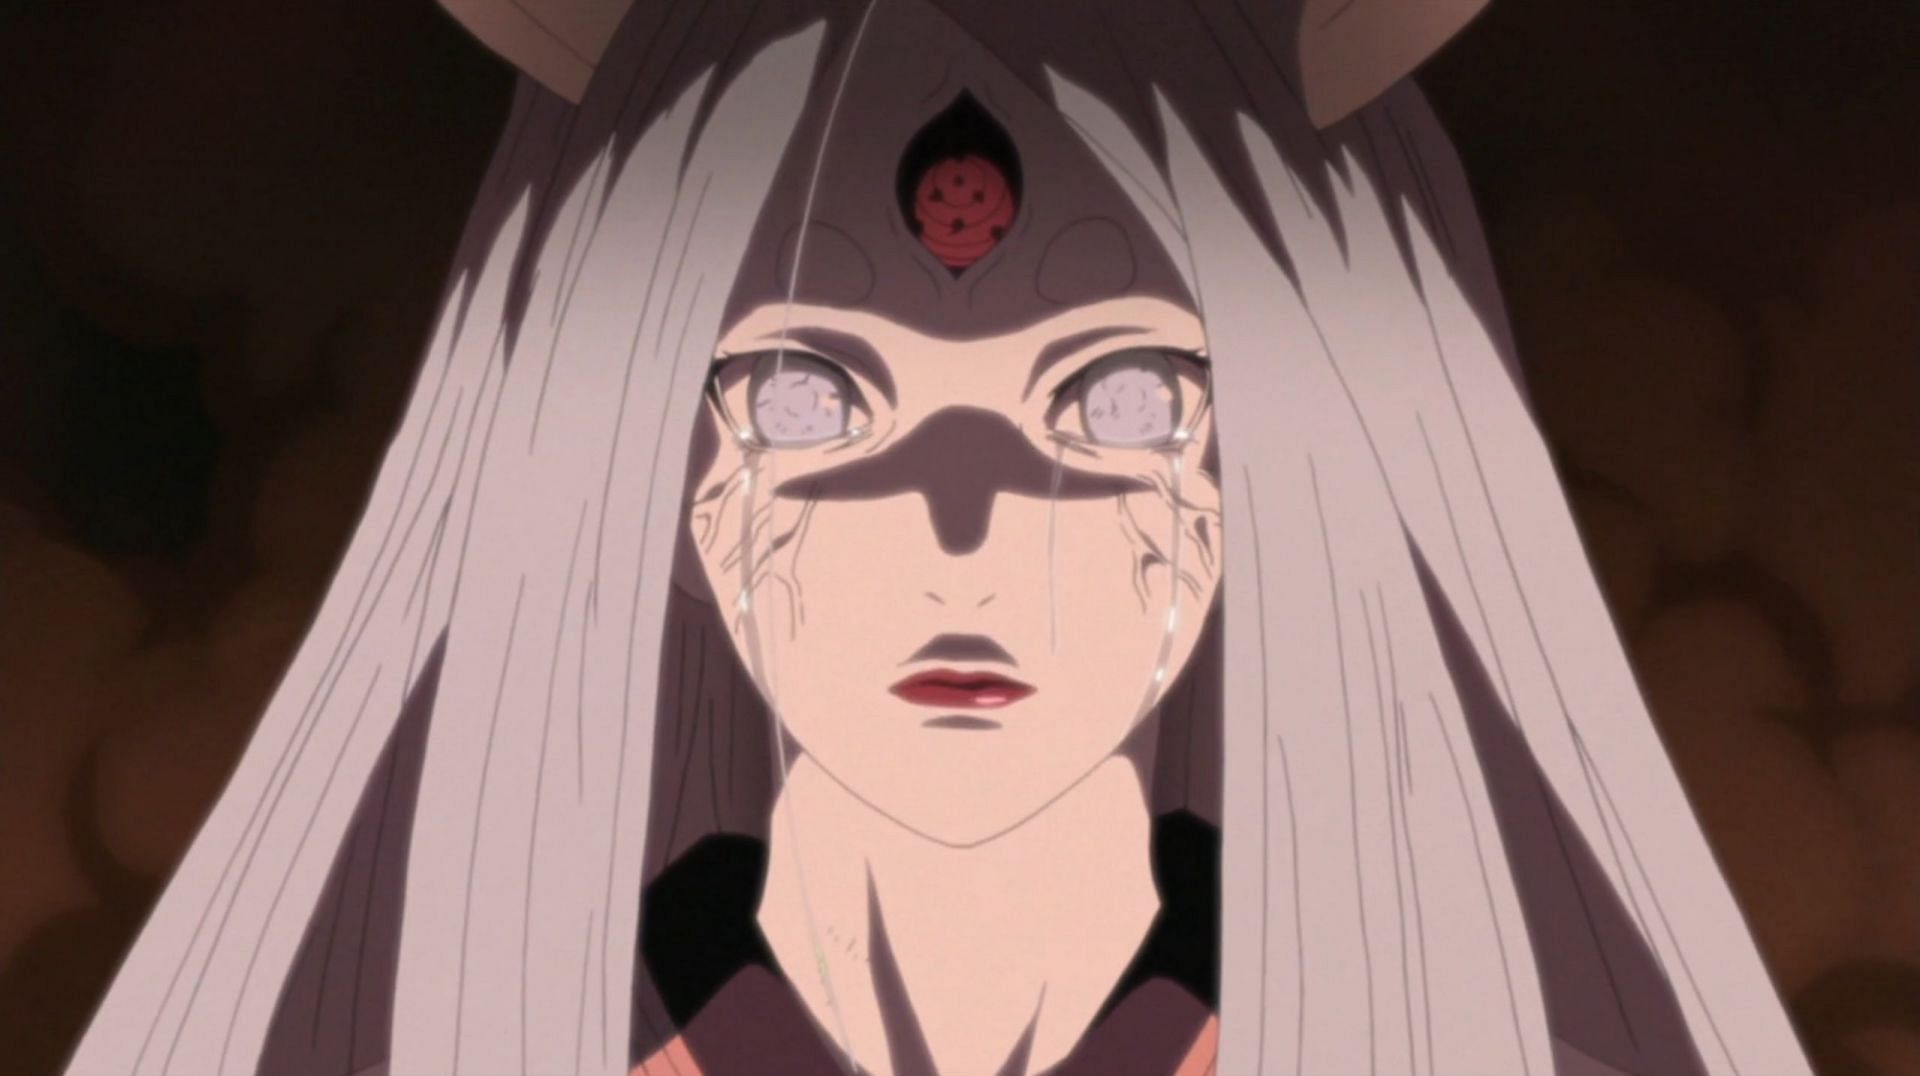 Kaguya Otsutsuki crying, as seen in the Naruto Shippuden anime. (Image via Studio Pierrot)